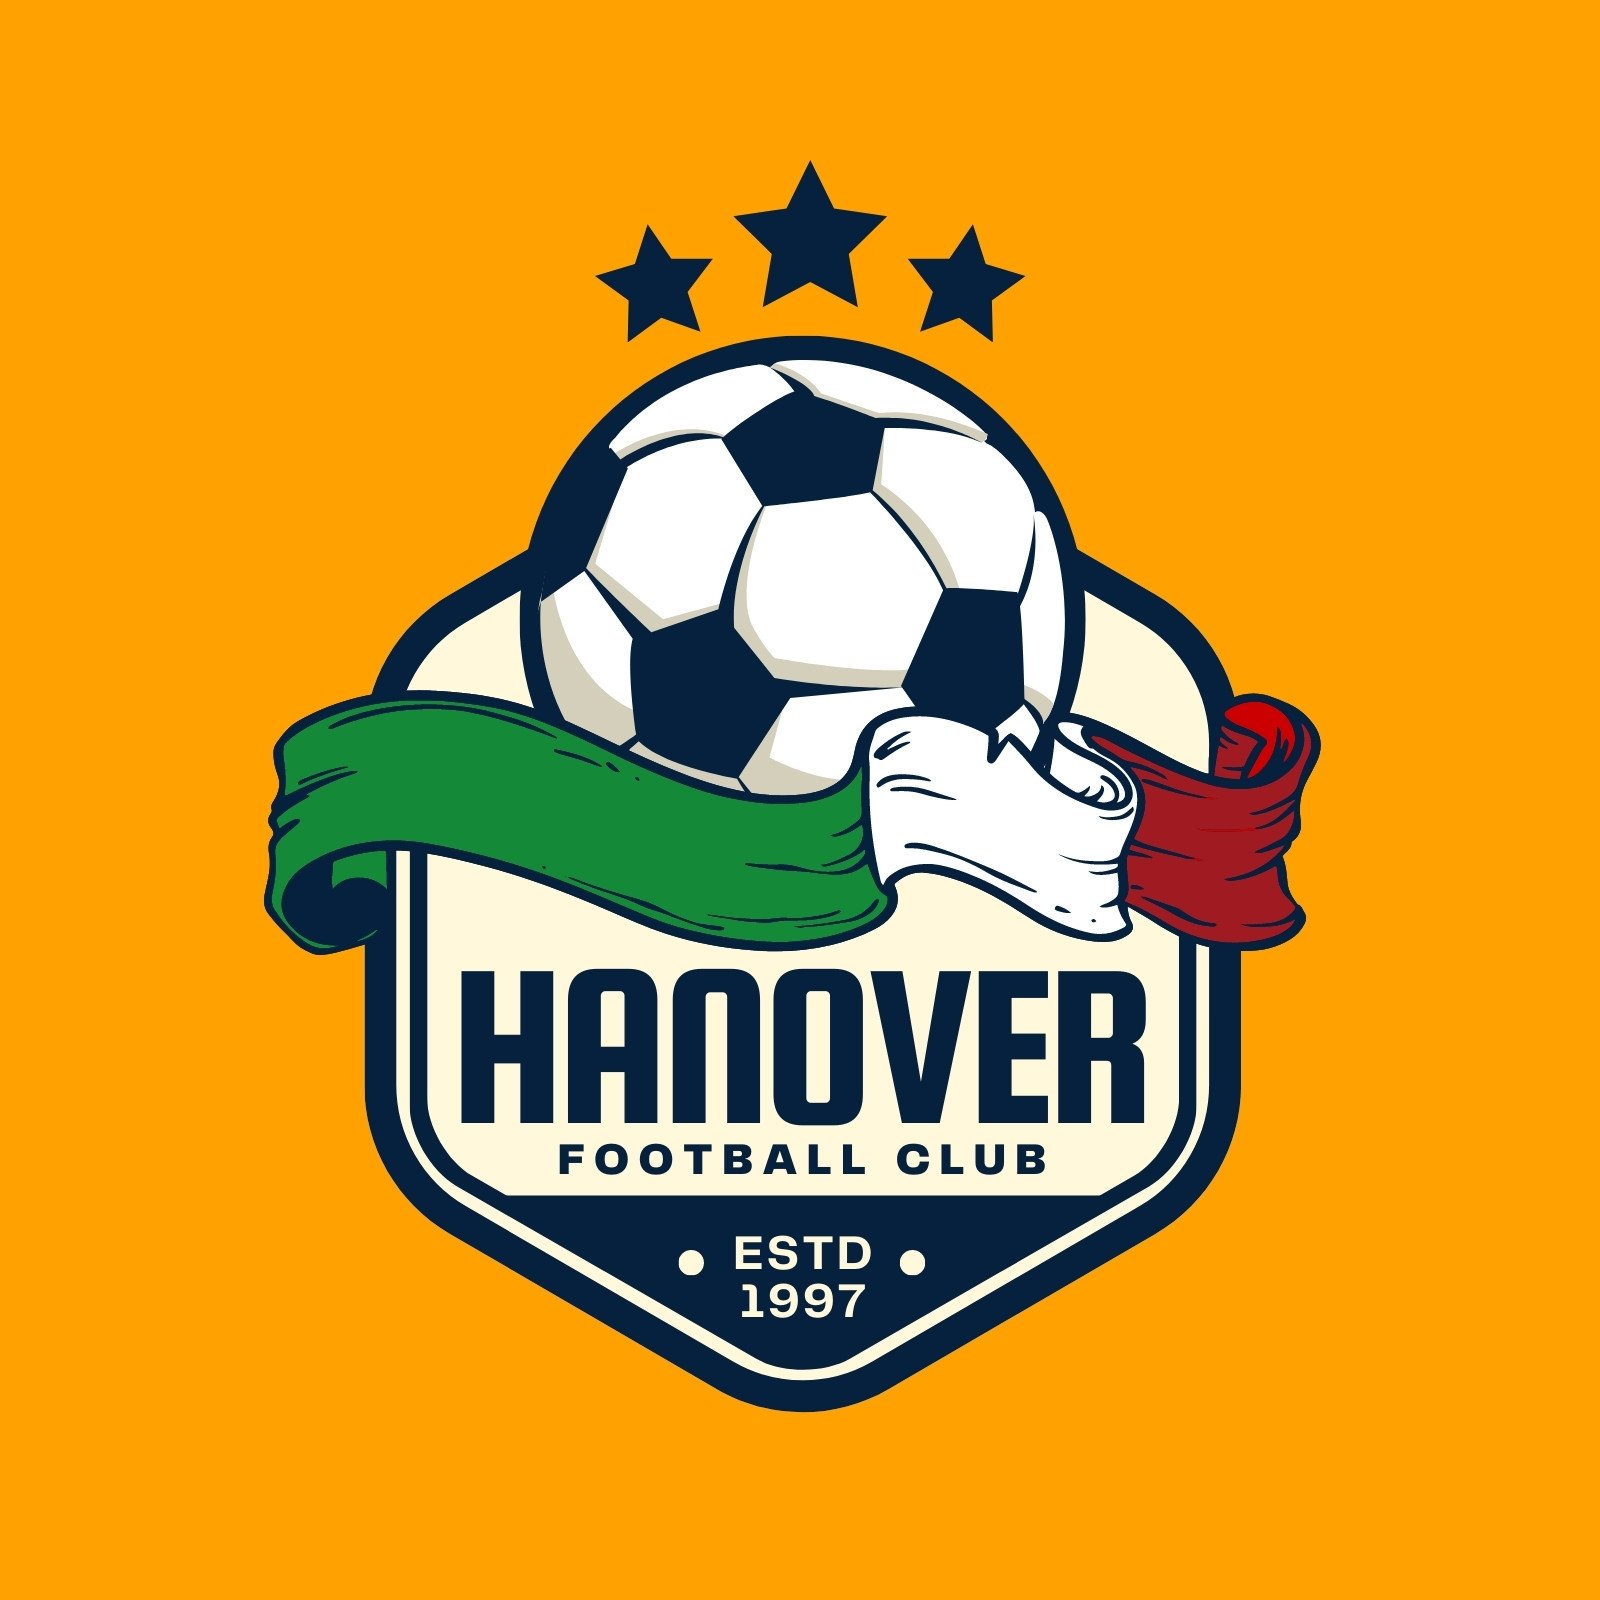 Customize 312+ Football Logo Templates Online - Canva